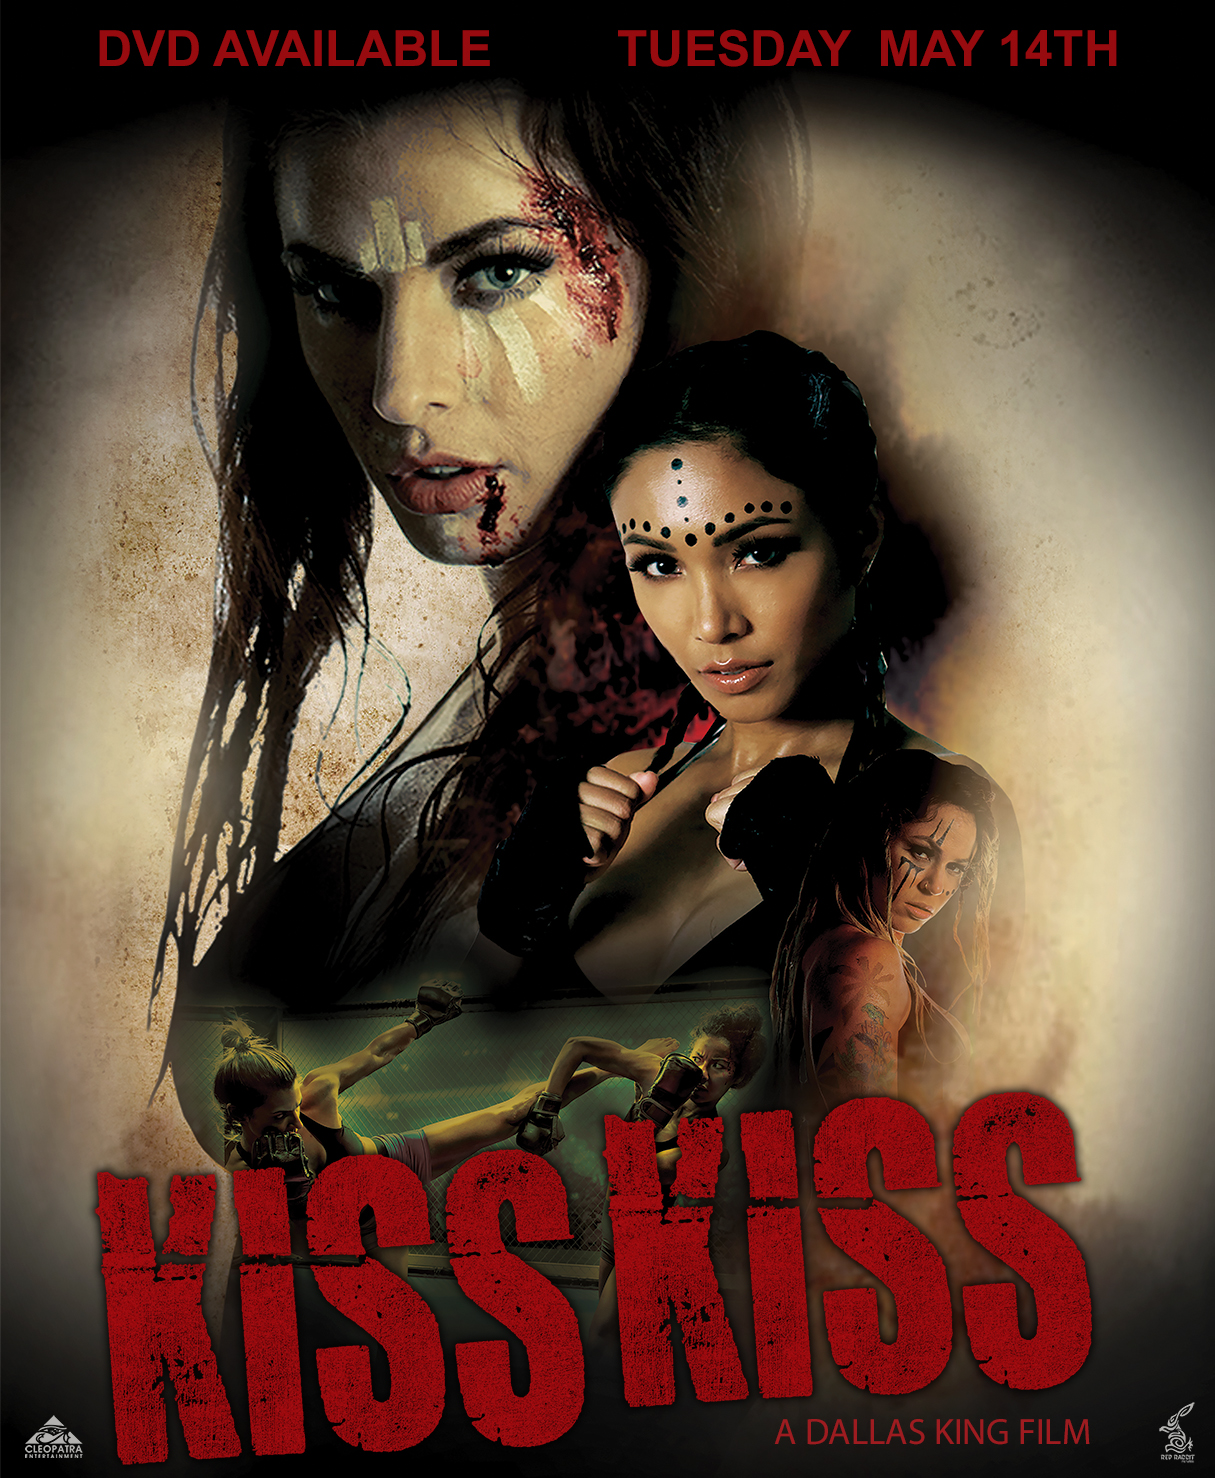 KISS-KISS-Official POSTER-DVD 1.0